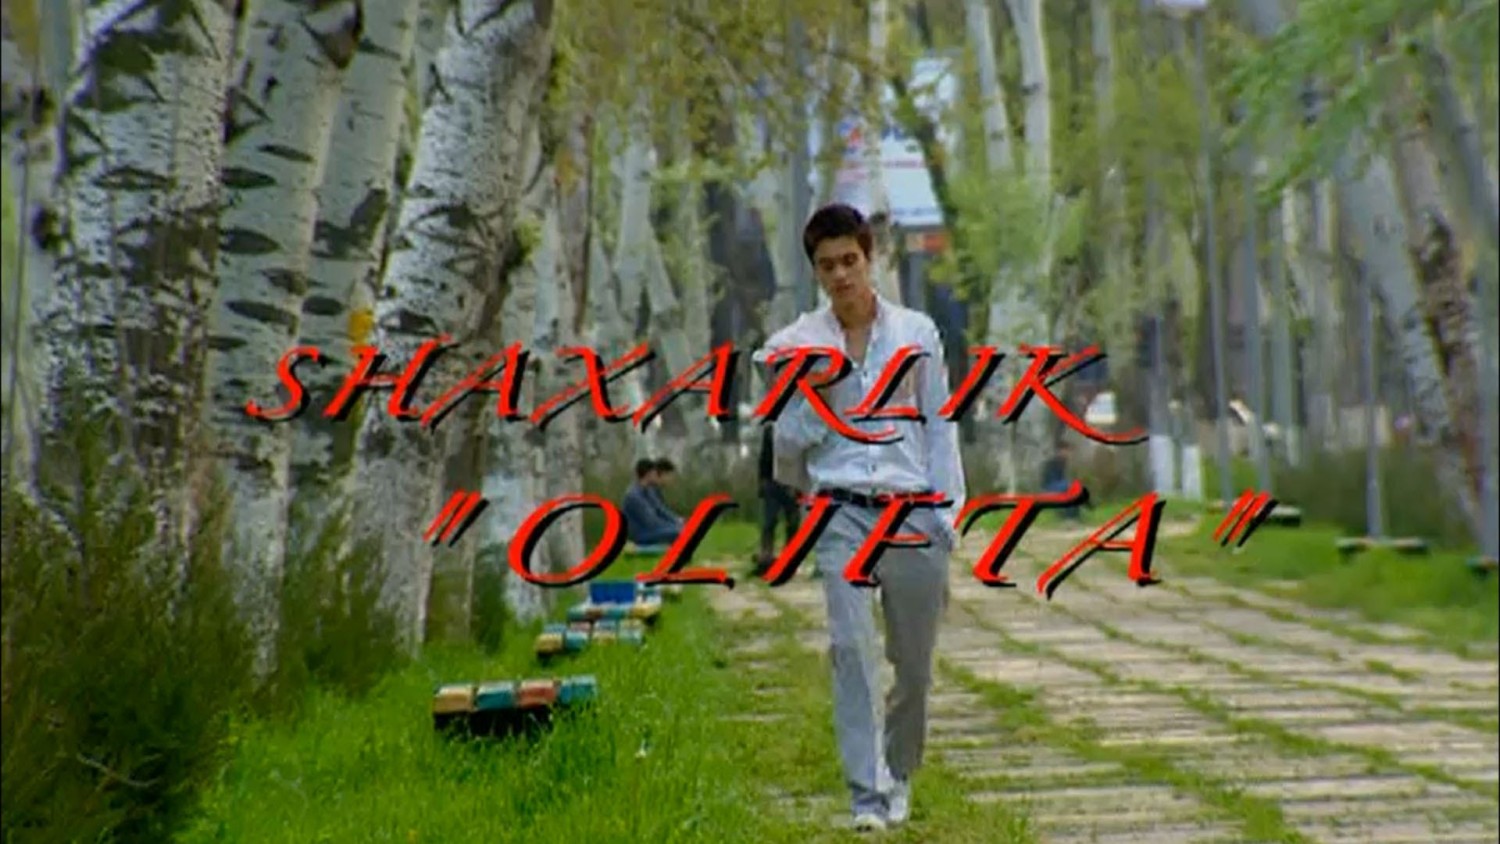 Shaharlik olifta (o'zbek film) | Шахарлик олифта (узбекфильм)